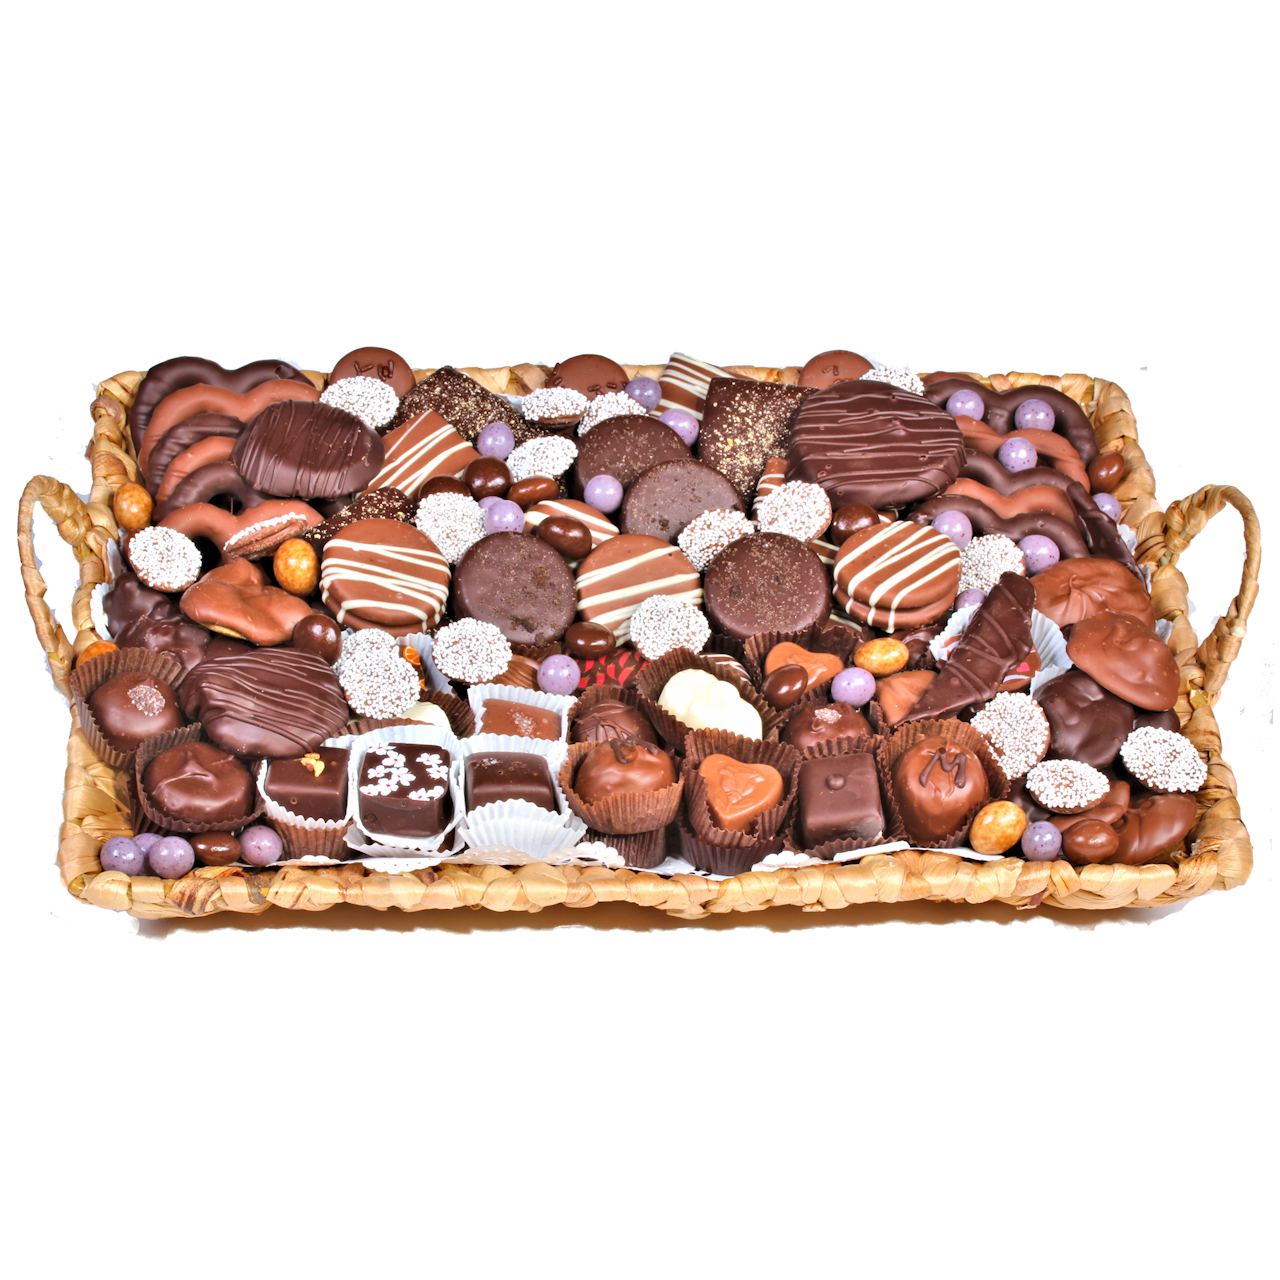 Gourmet Chocolates & Truffles Platter